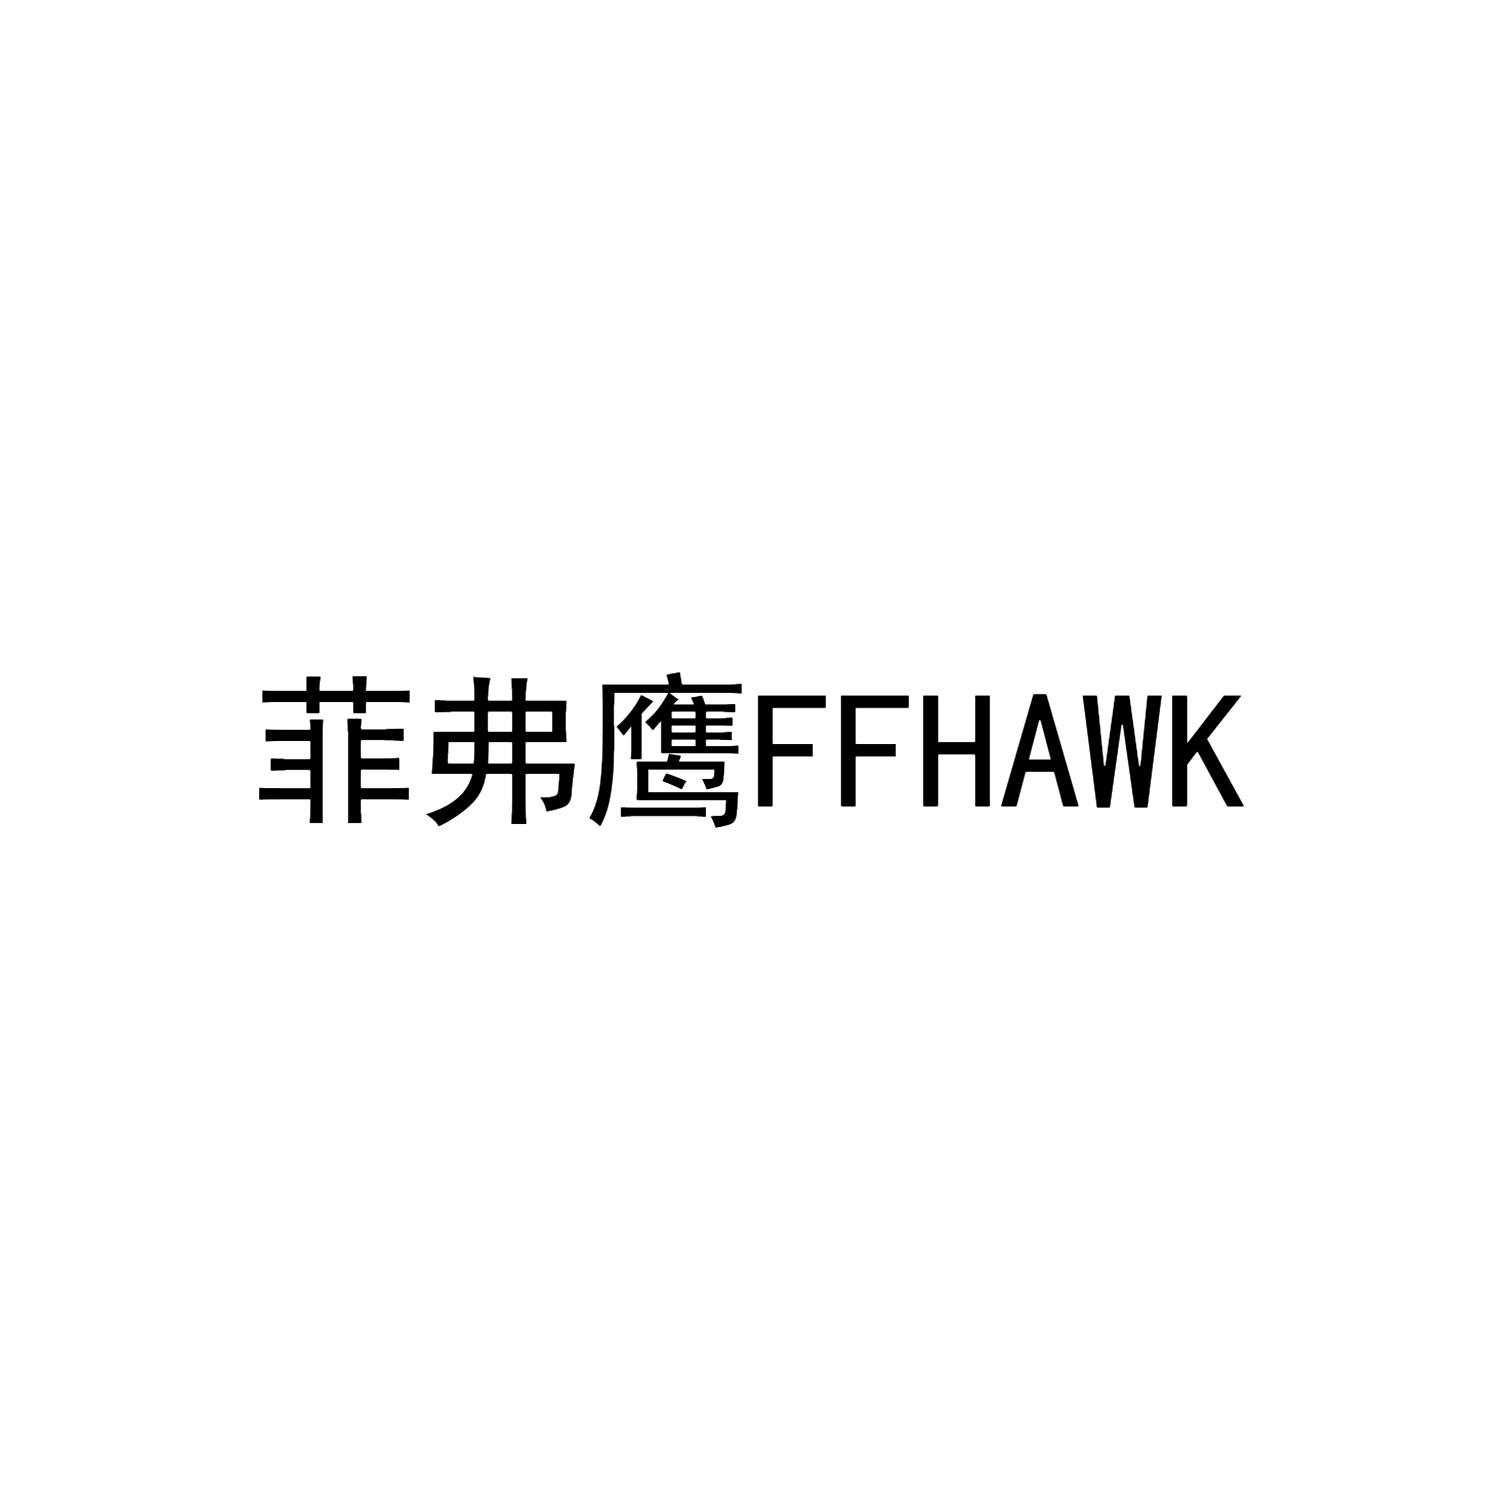 菲弗鹰 FFHAWK商标转让